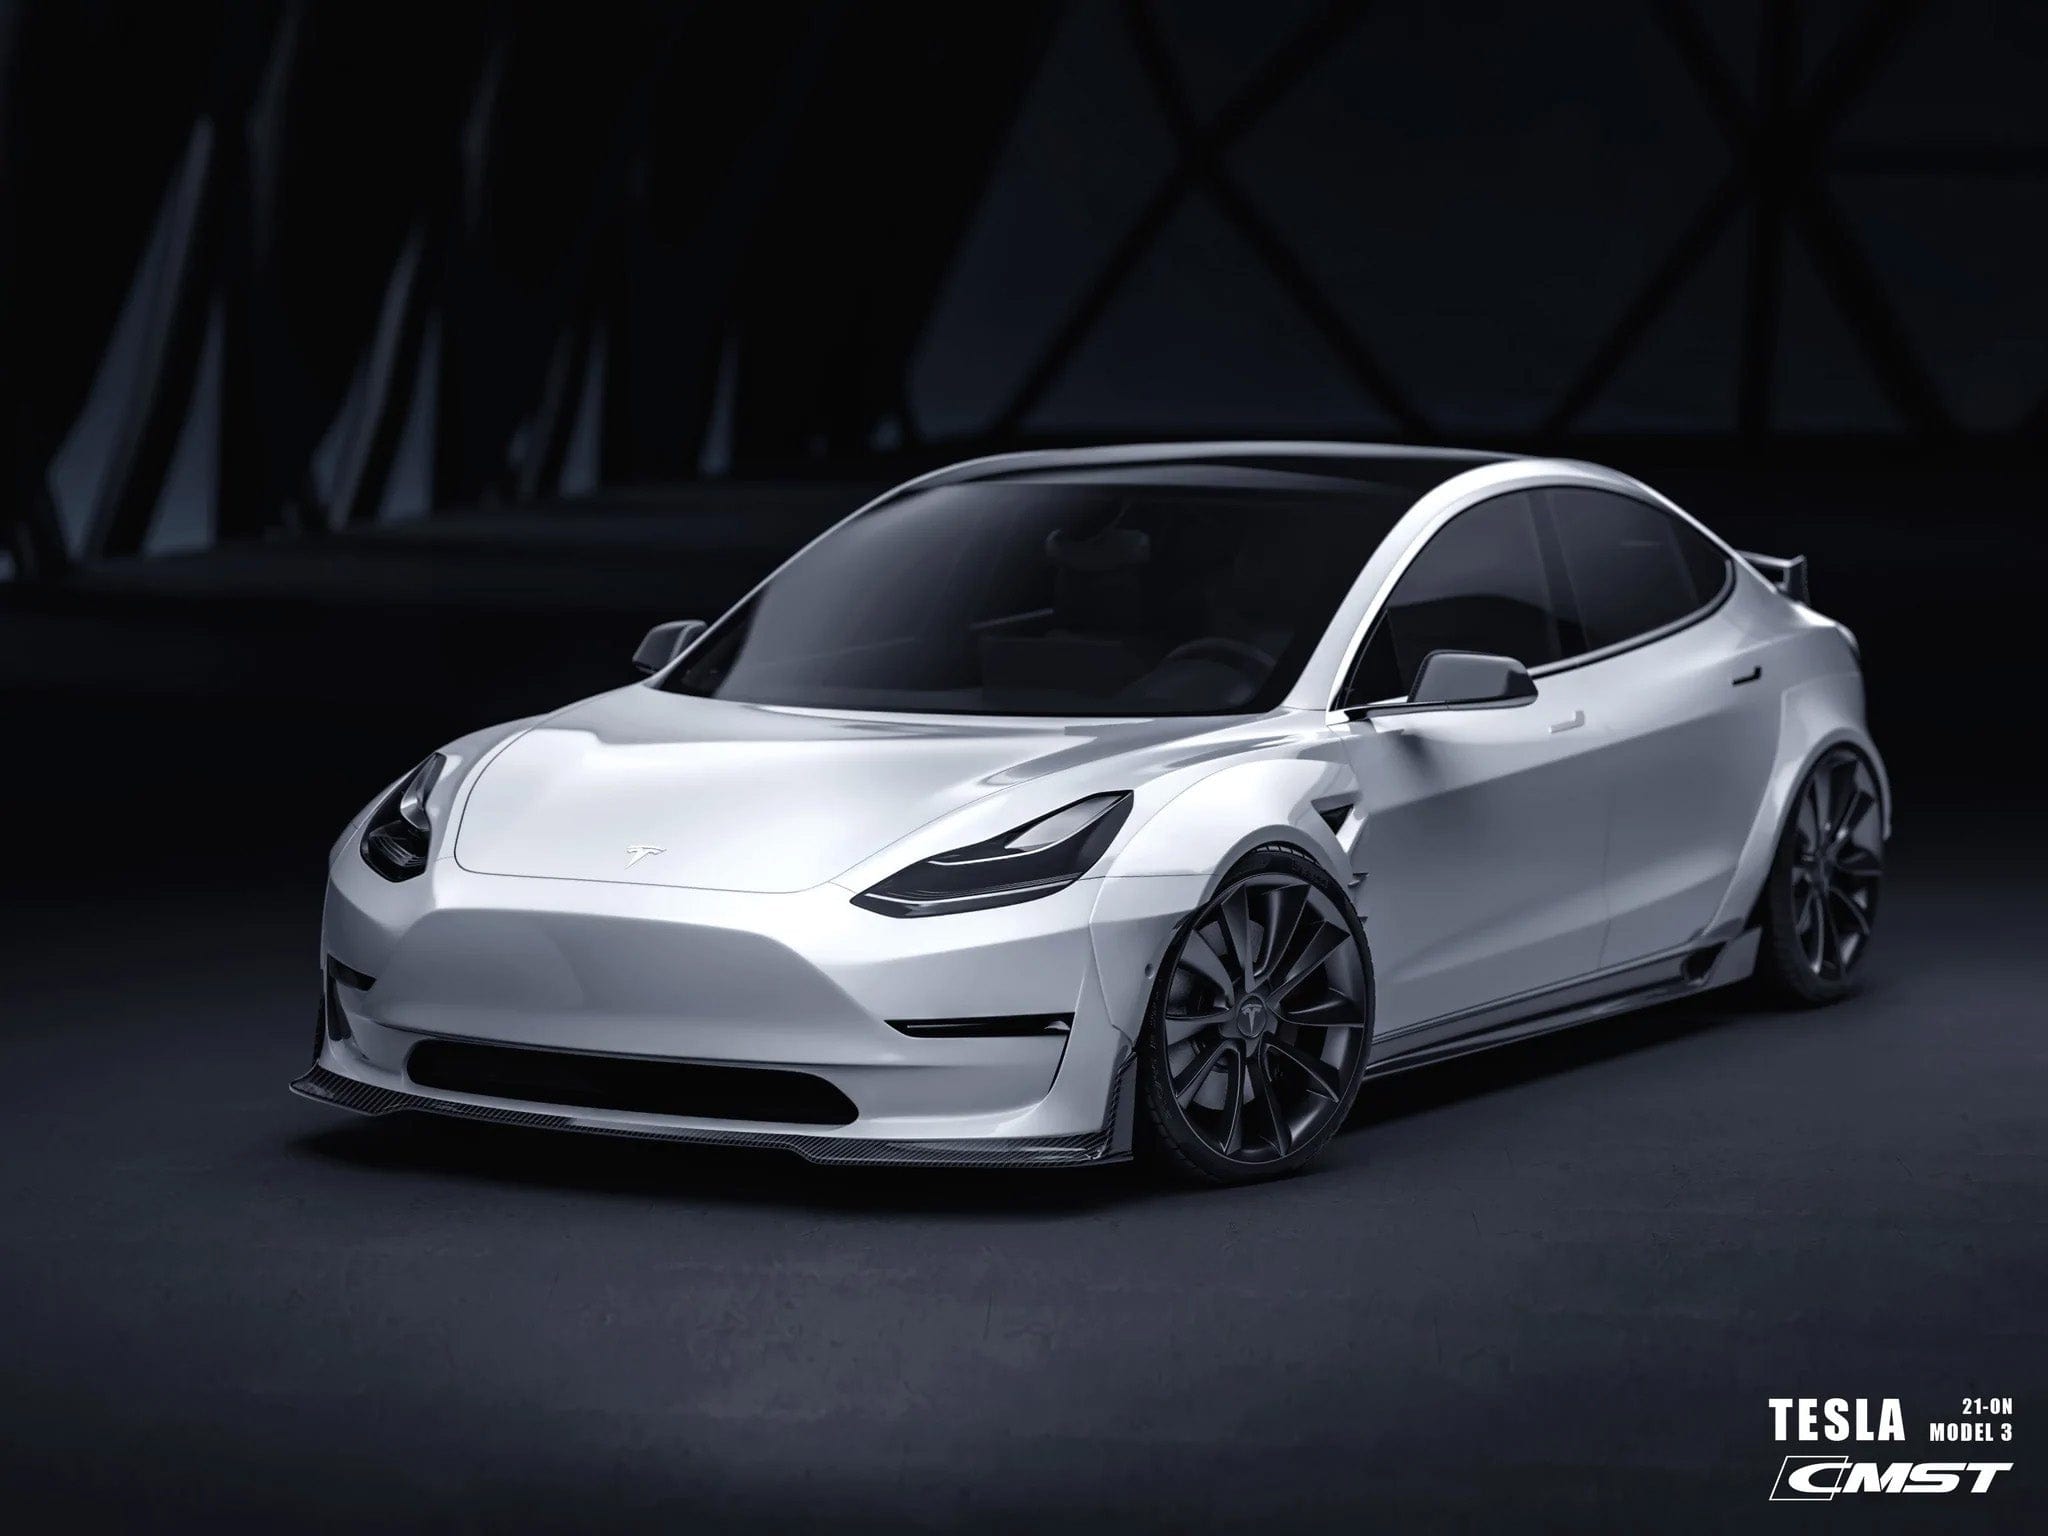 CIADAZ Auto Gurtpolster für Tesla Model 3 2017-2023